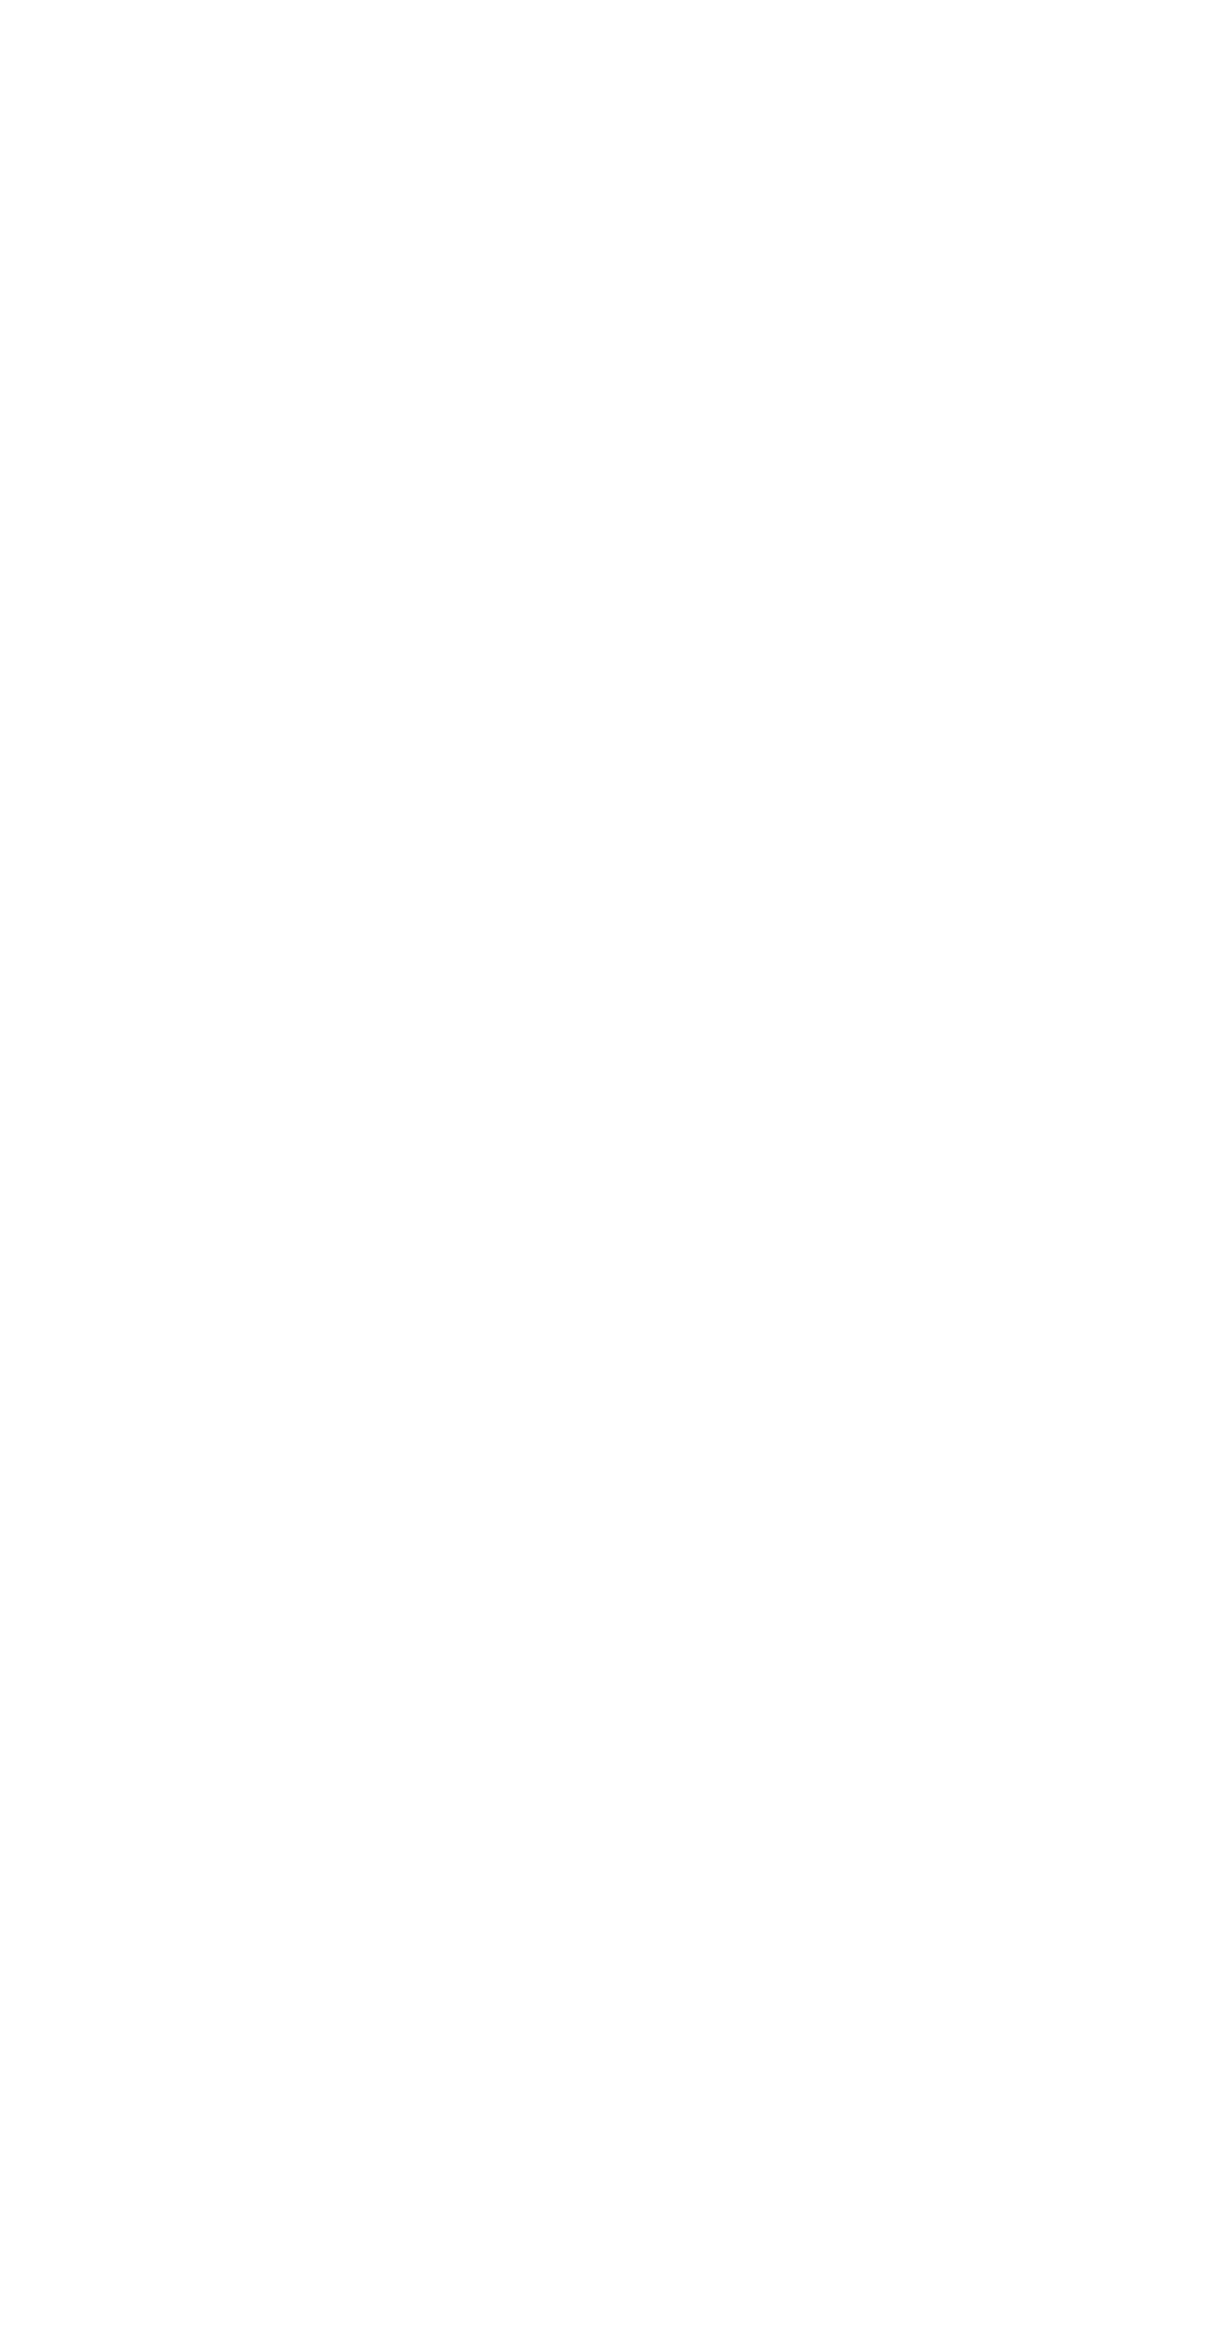 Narrative Materials ものがたるものたち 東京大学筧康明研究室 成果発表会 / 2021年3月27日から29日まで